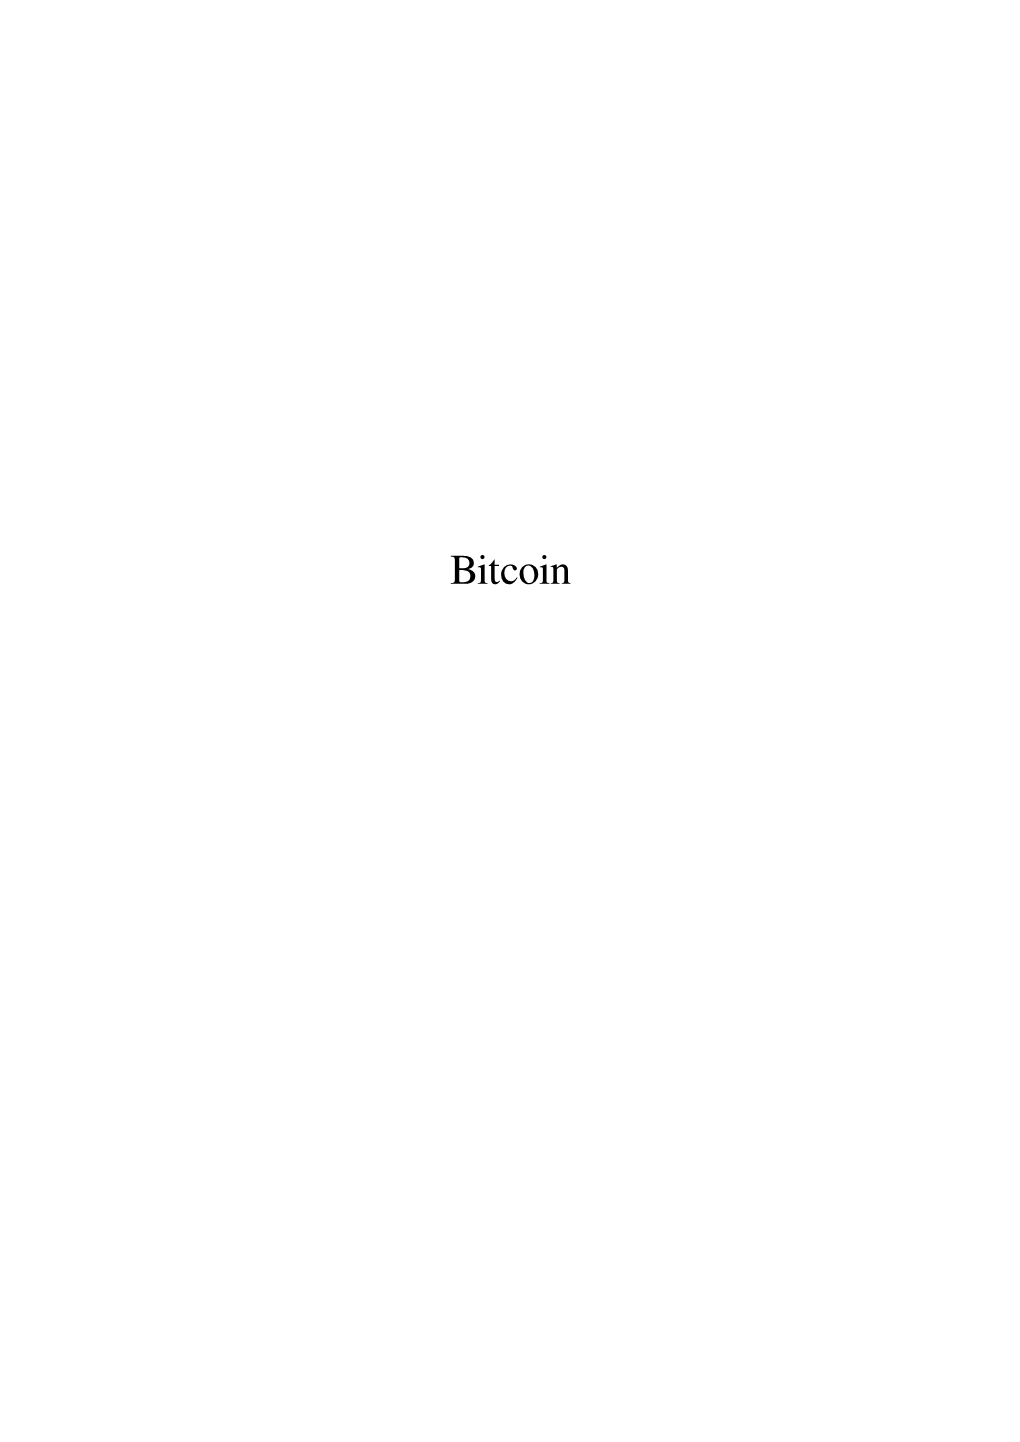 Bitcoin Contents